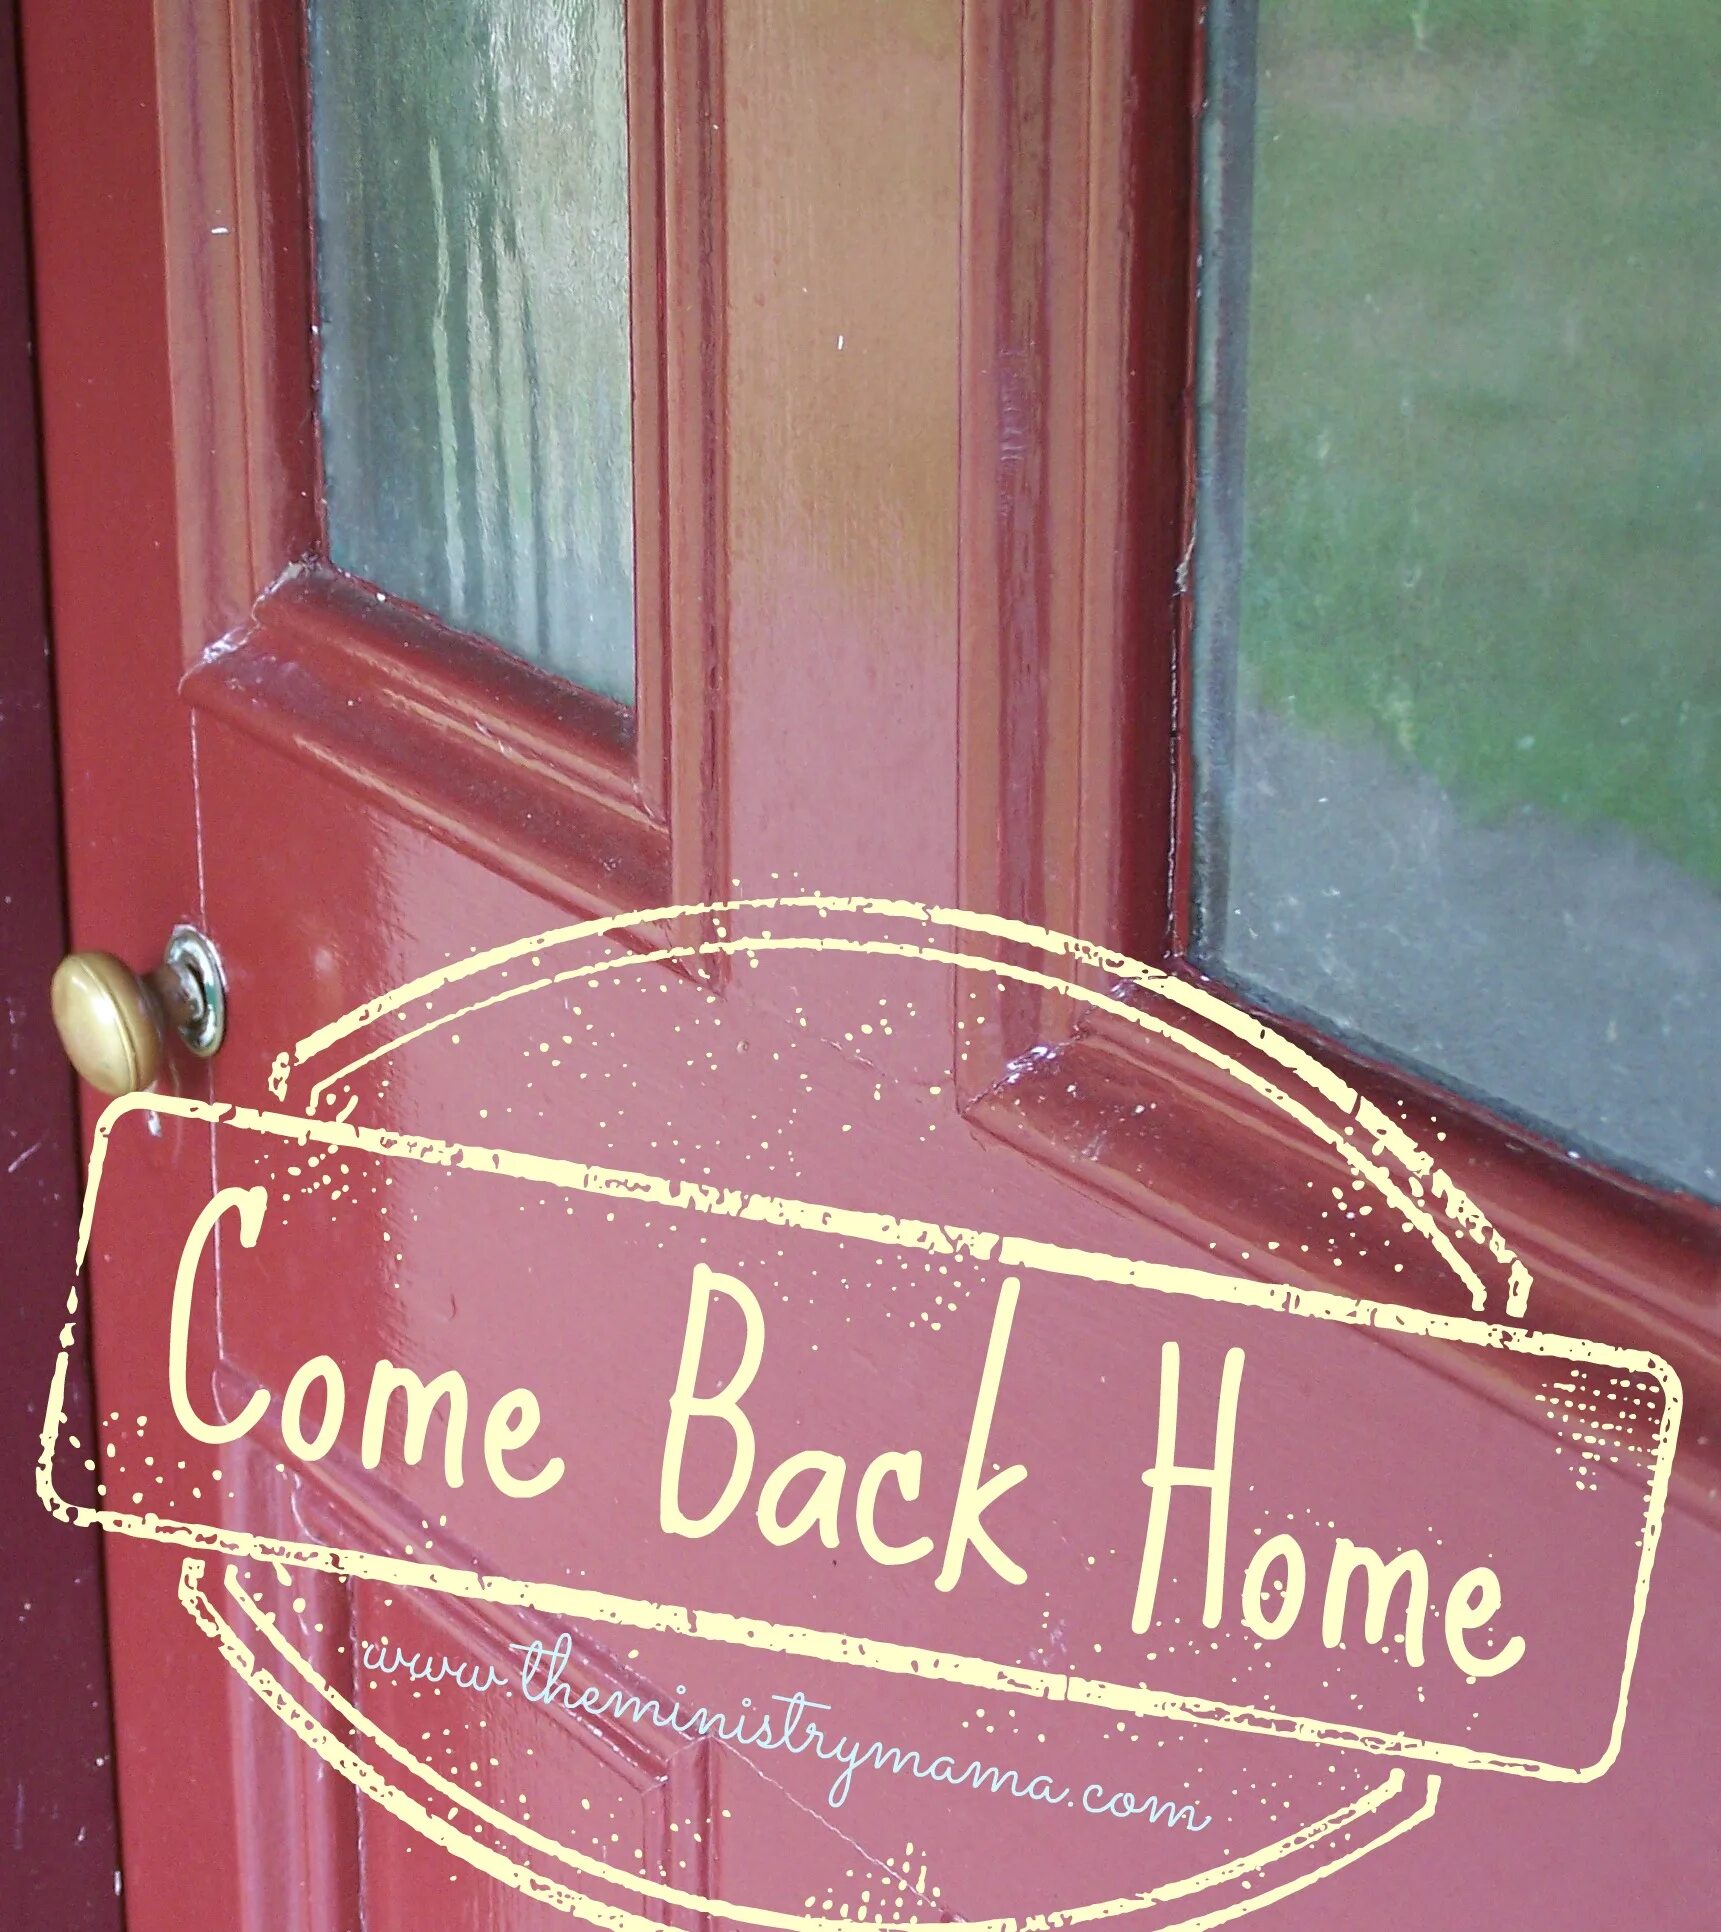 Come back картинка для детей. Back Home. Coming back Home. Come Home. Getting back home